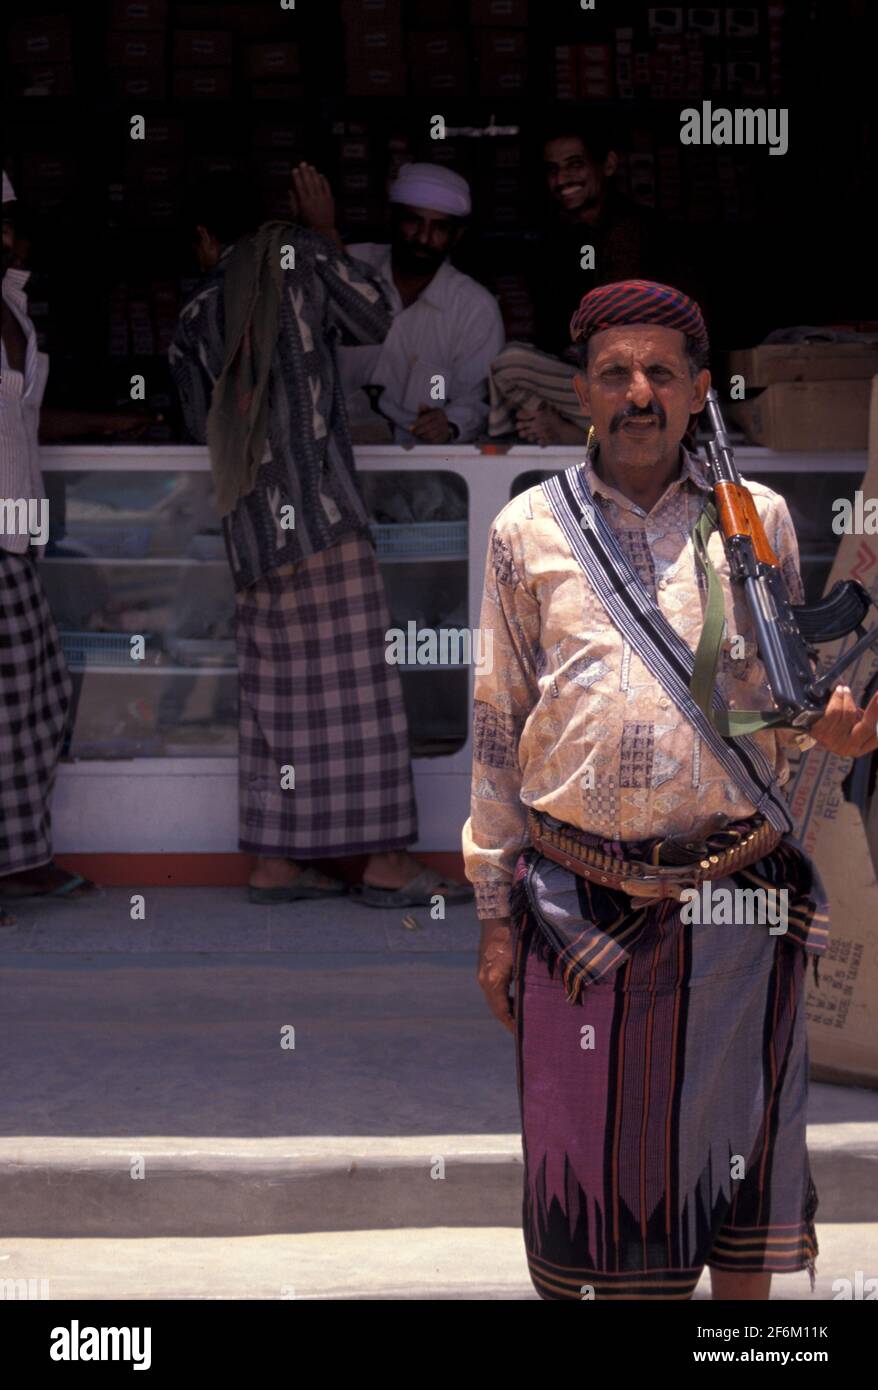 Yemeni posing with a Kalashnikov rifle in the market of Sanaa, Yemen Stock Photo